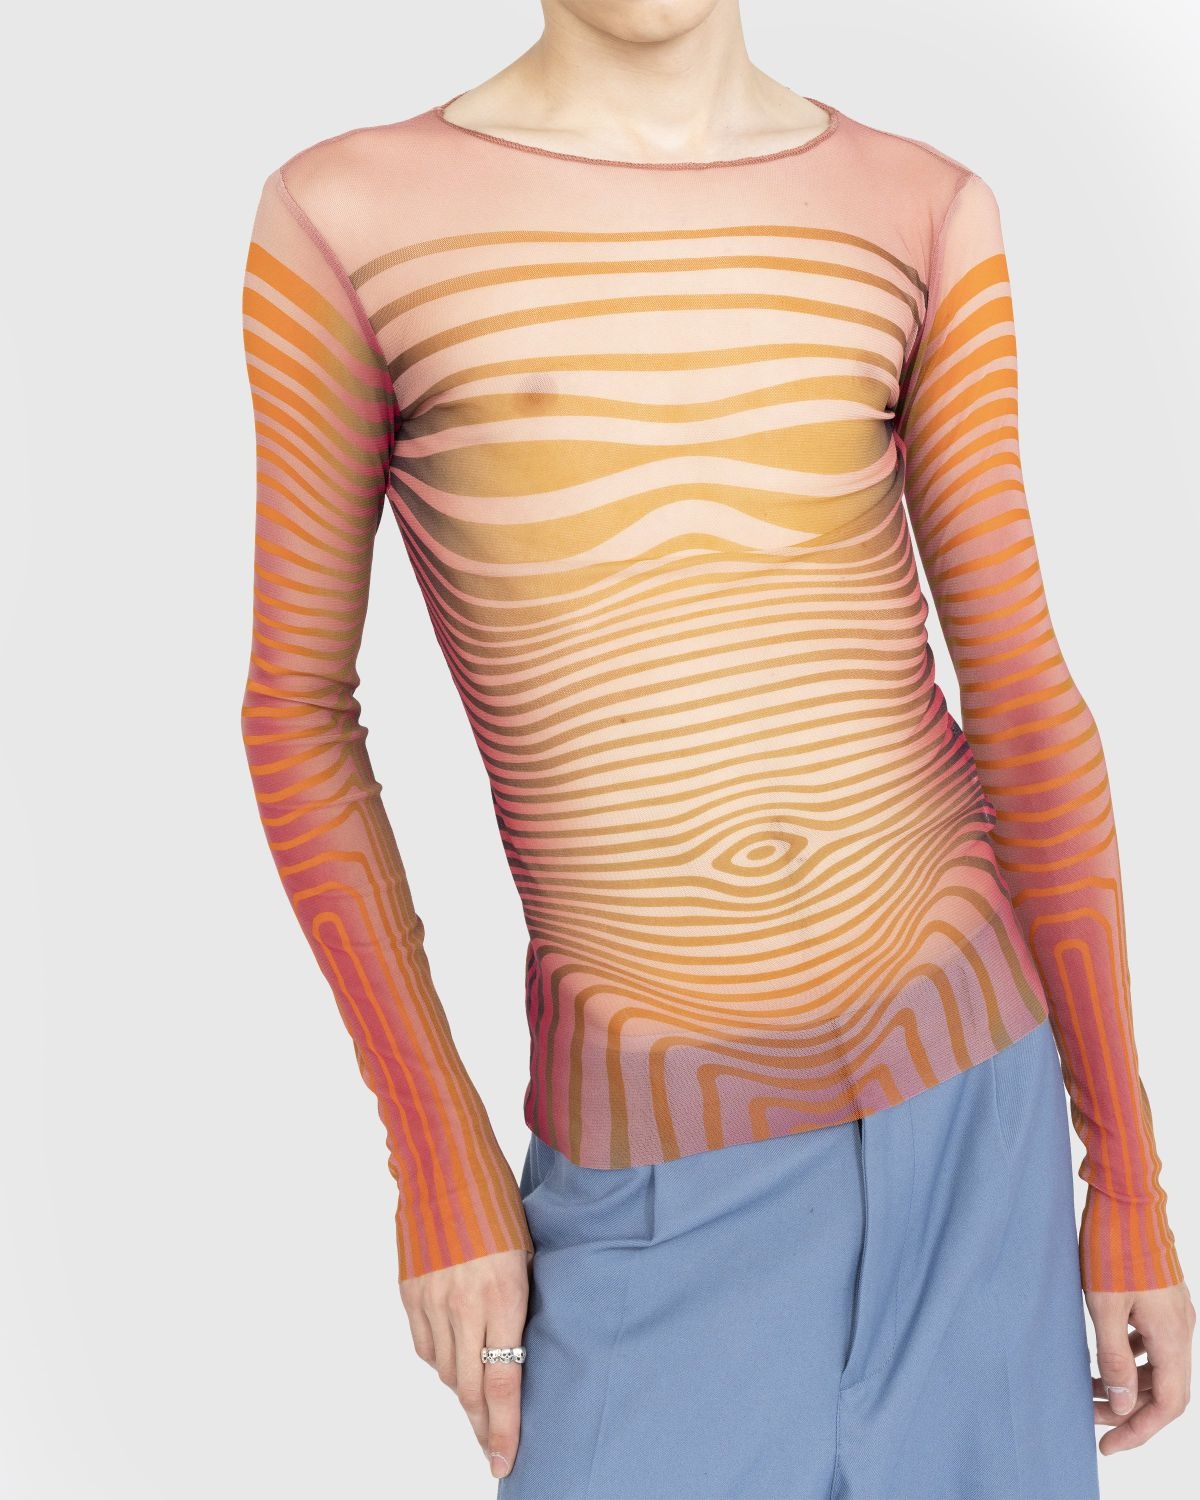 Jean Paul Gaultier – Crewneck Long Sleeves Printed Morphing Stripes Red - 4